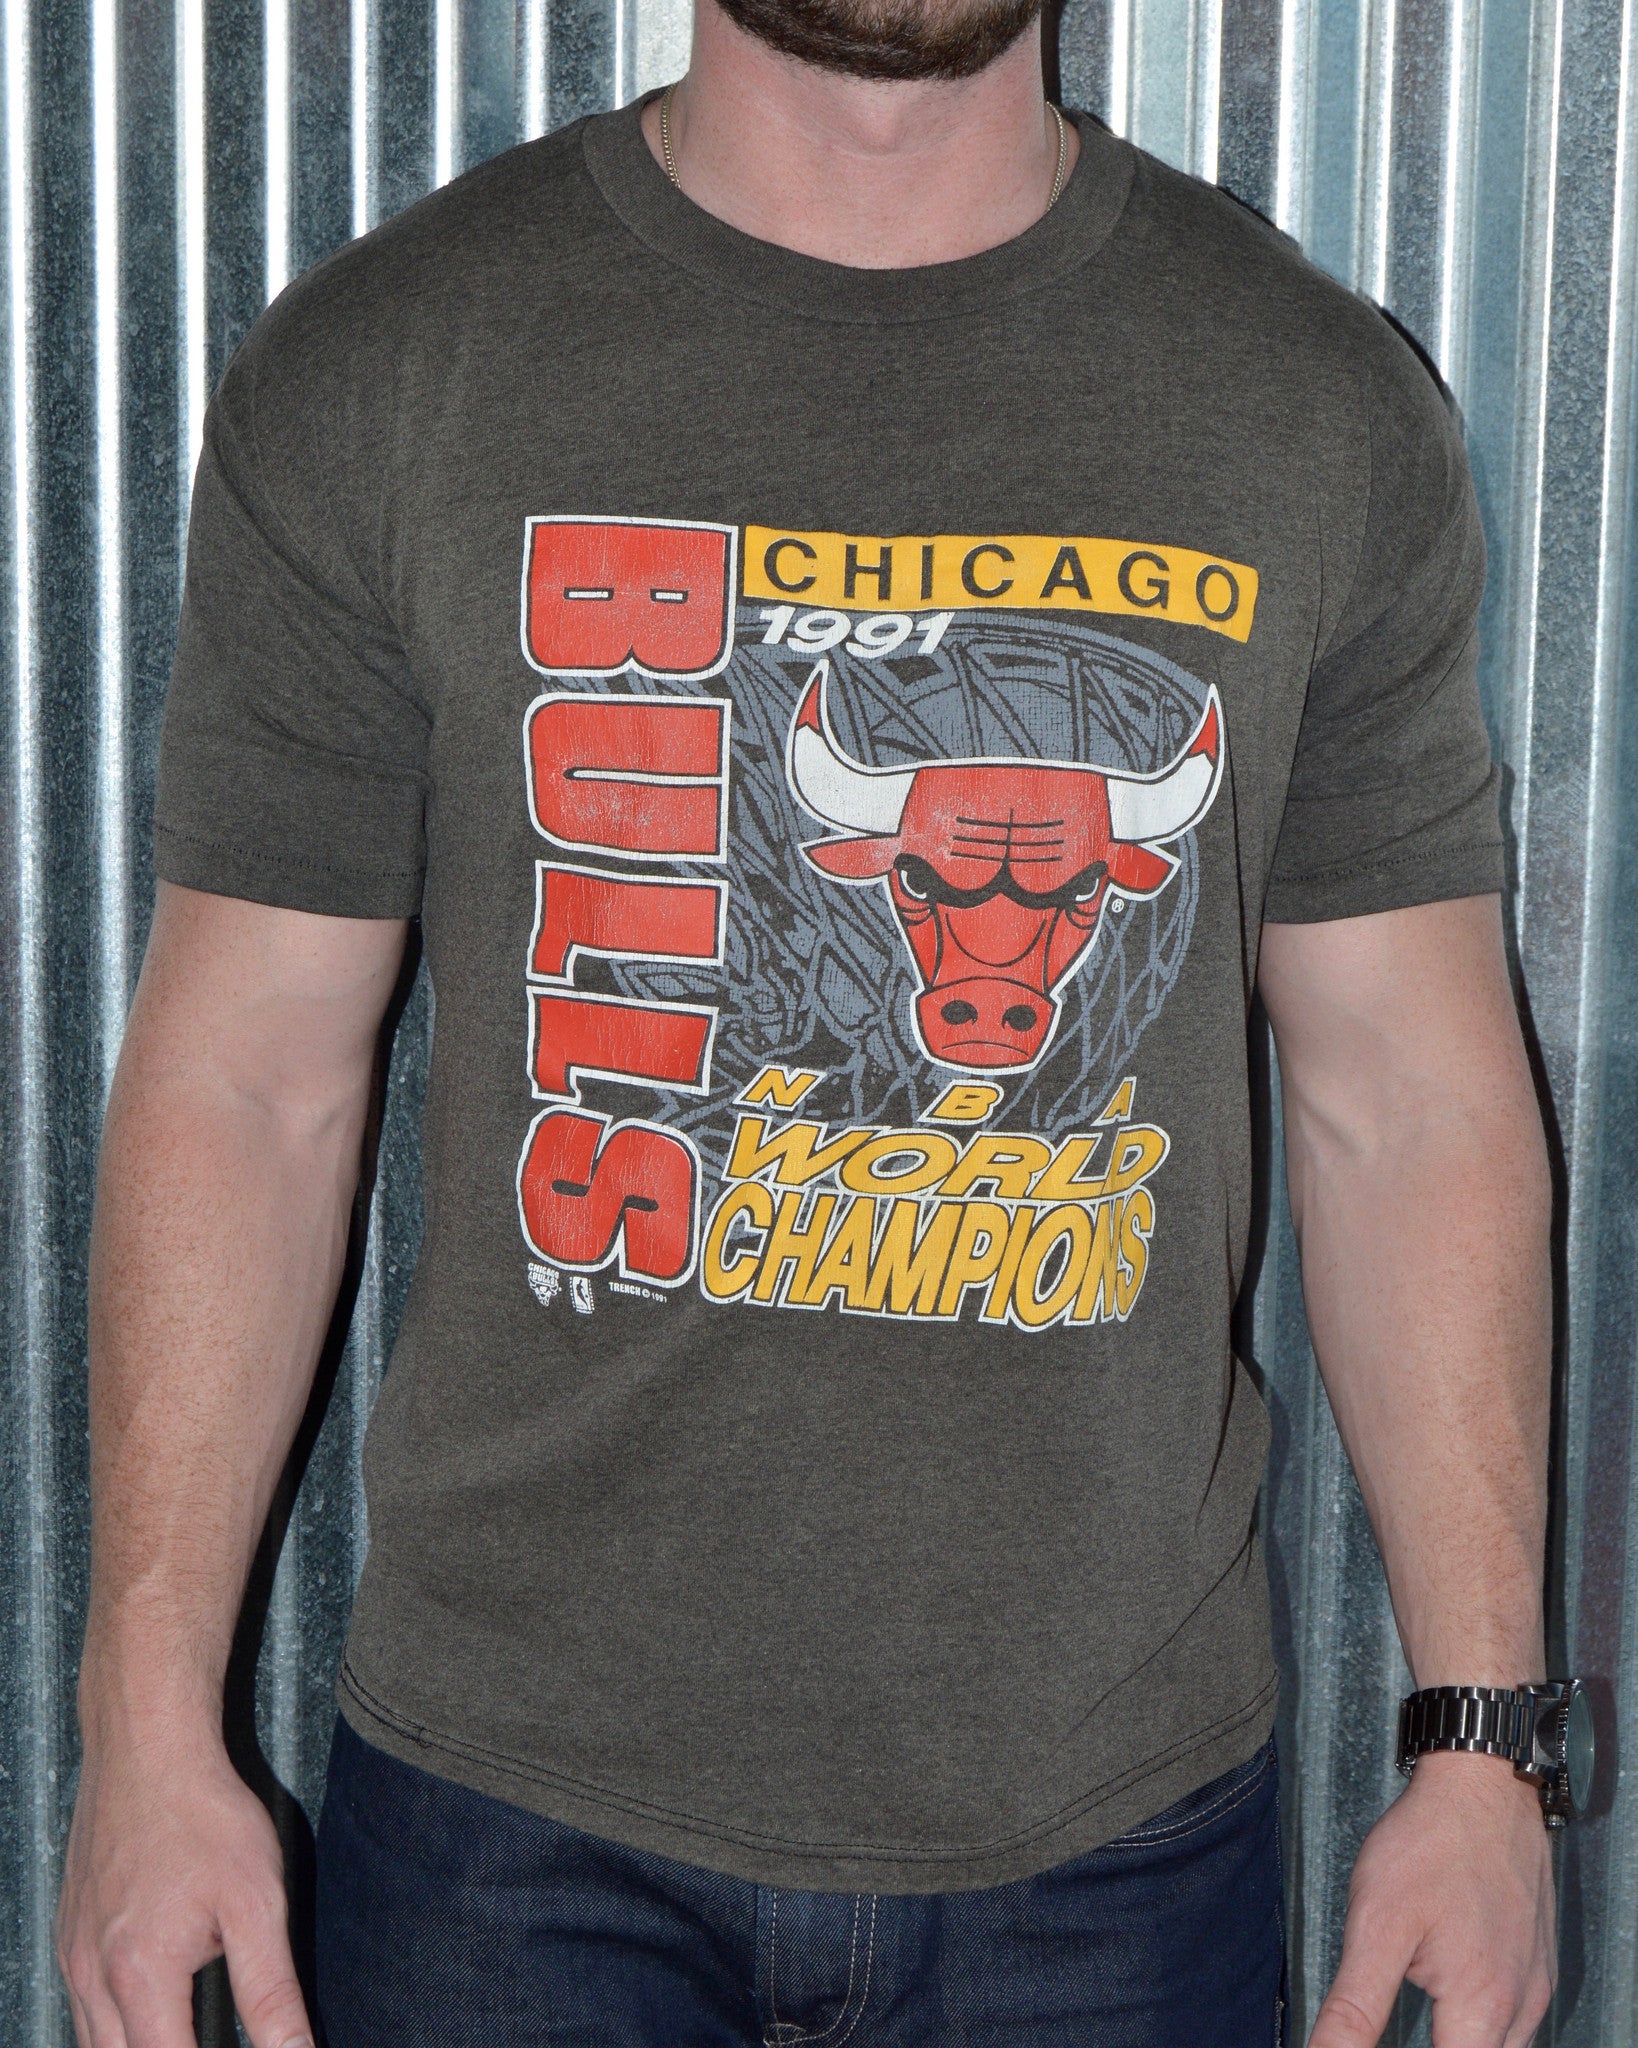 Chicago Bulls Shirts, Bulls T-Shirt, Tees